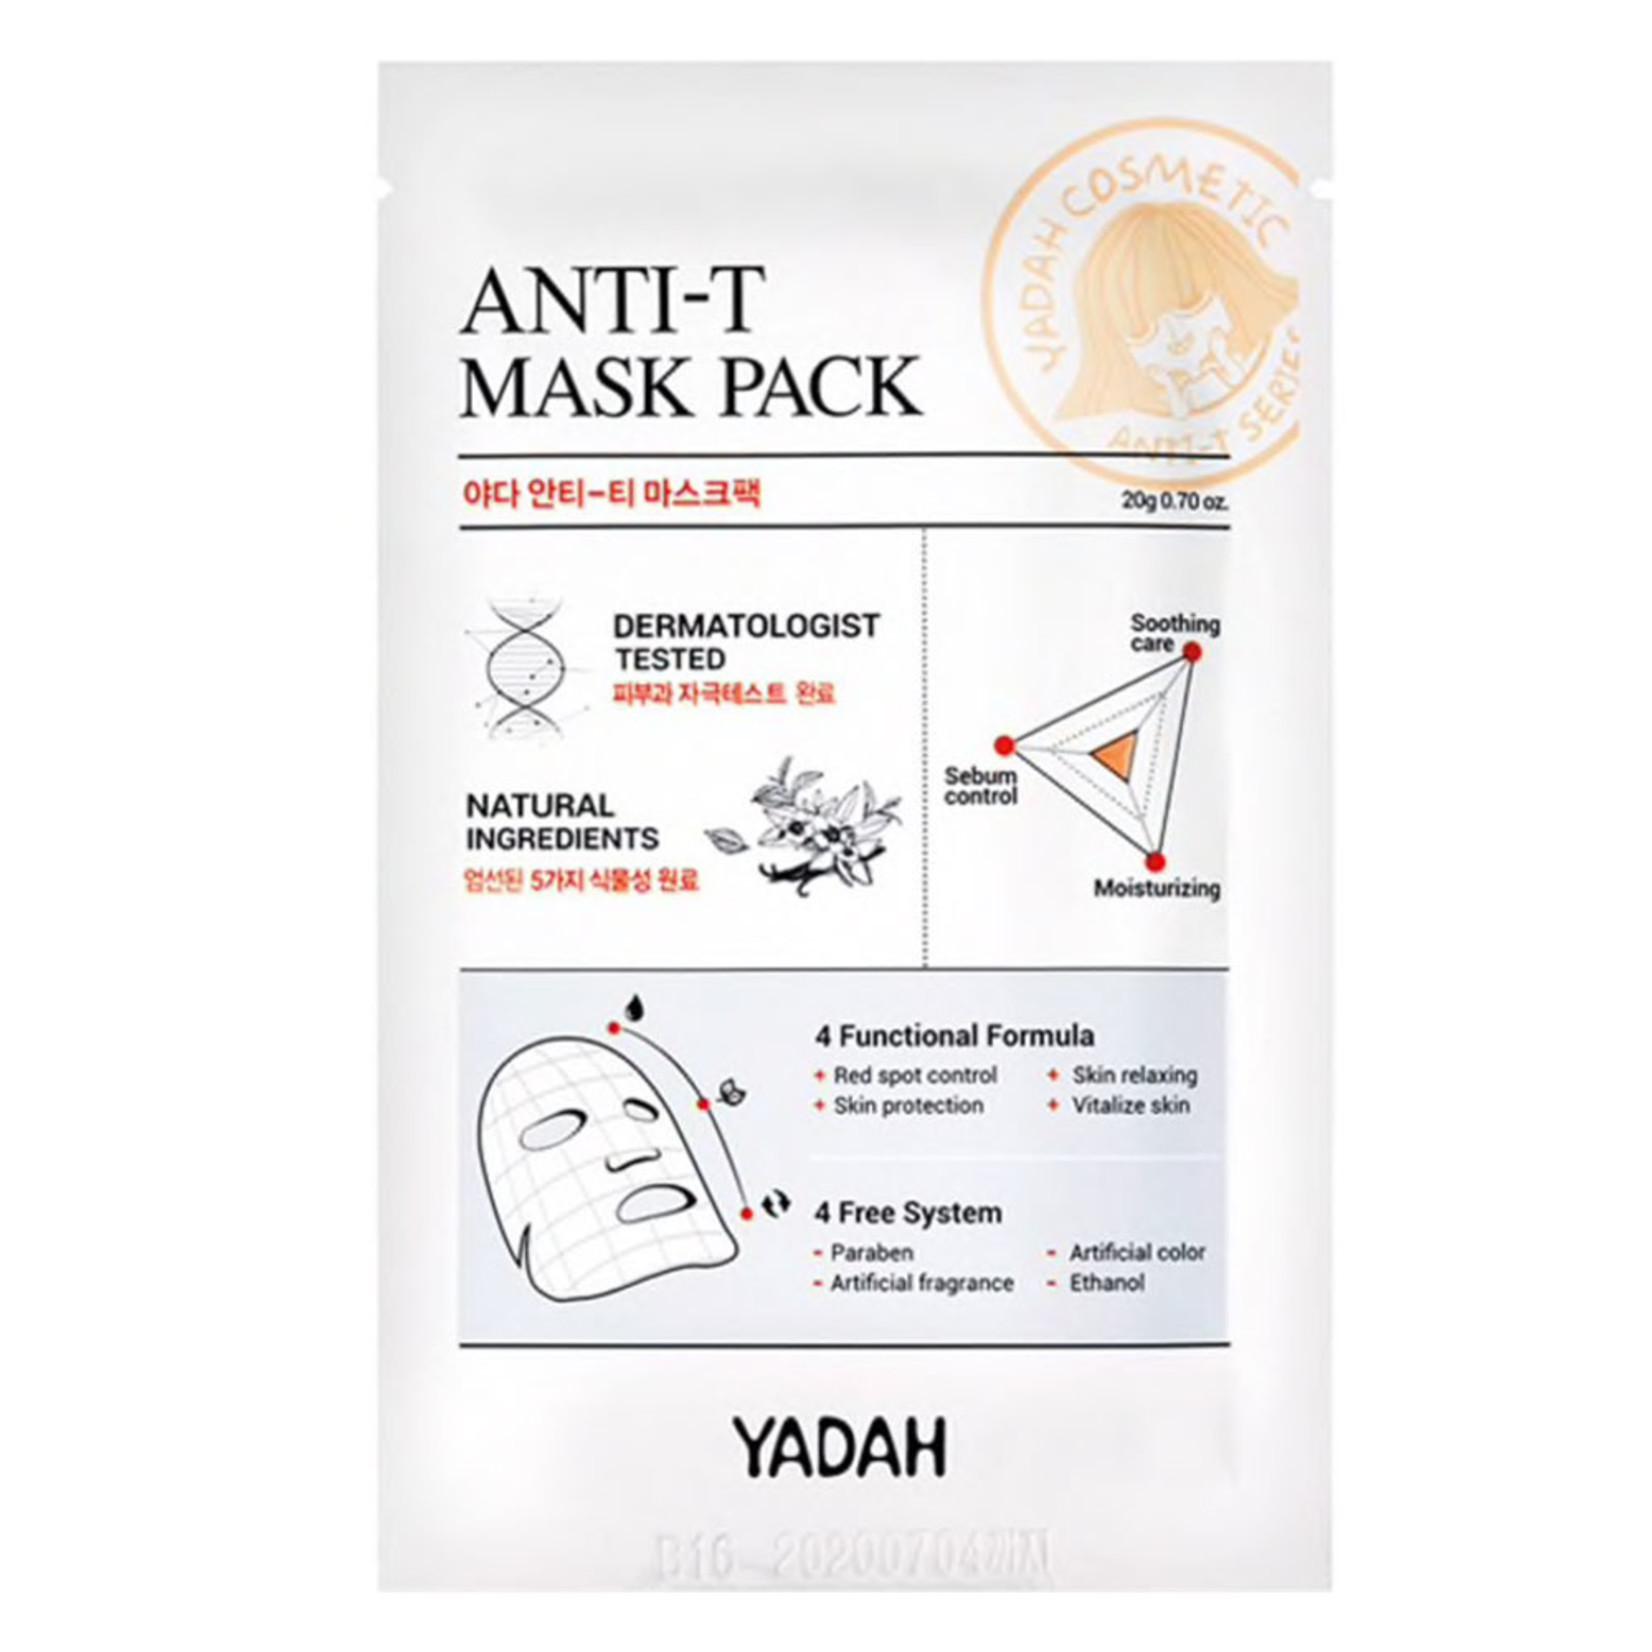 Yadah Anti-T Mask Pack